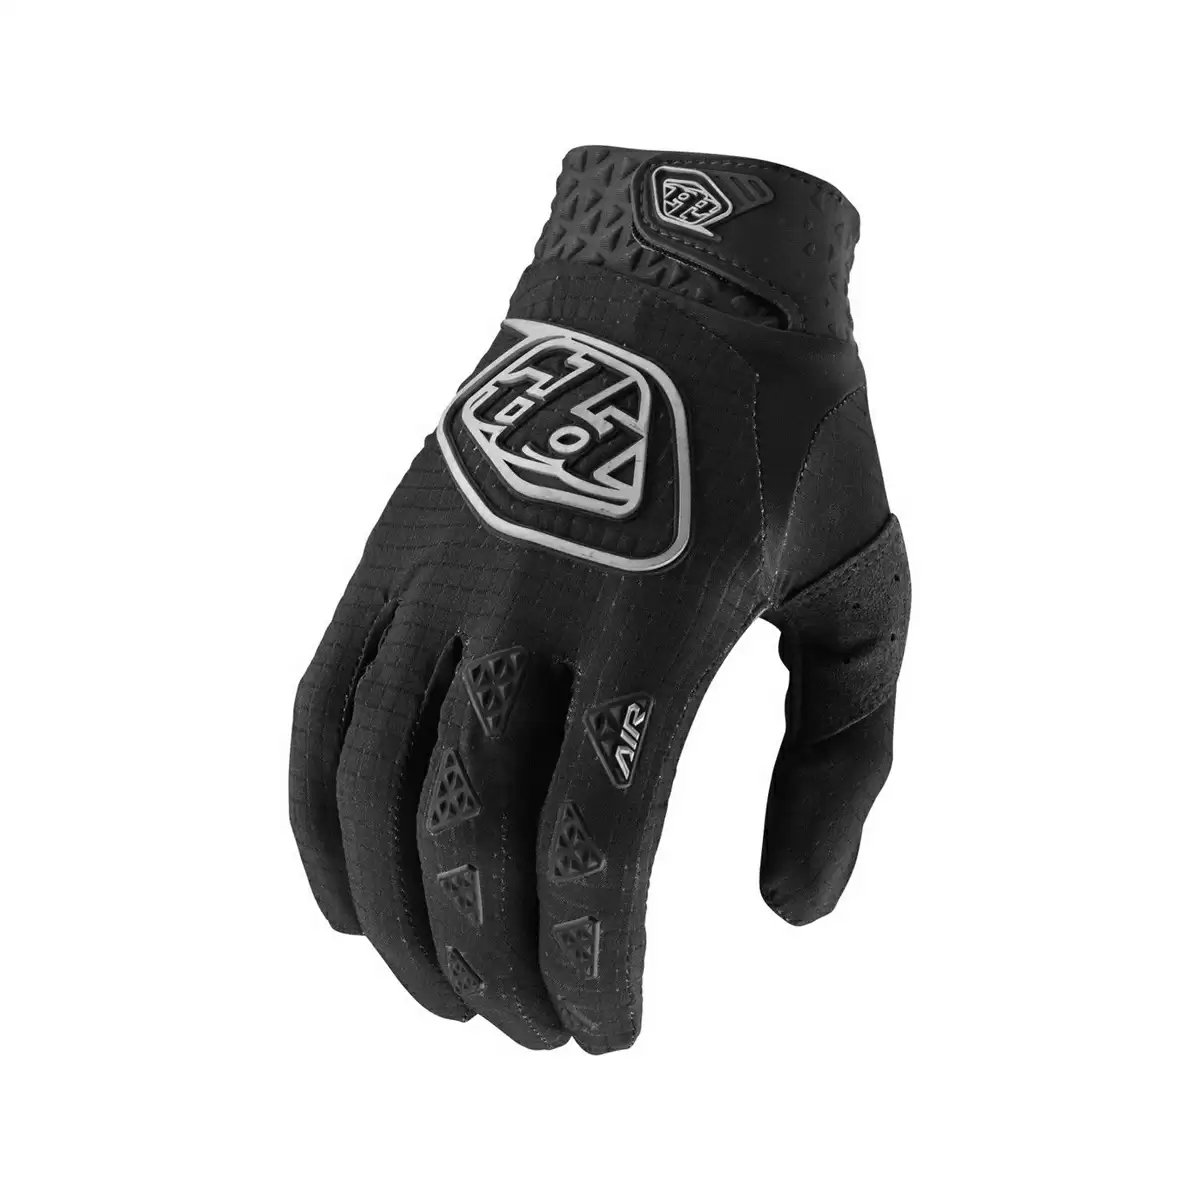 MTB-Handschuhe Air-Handschuhe Schwarz Größe L #1